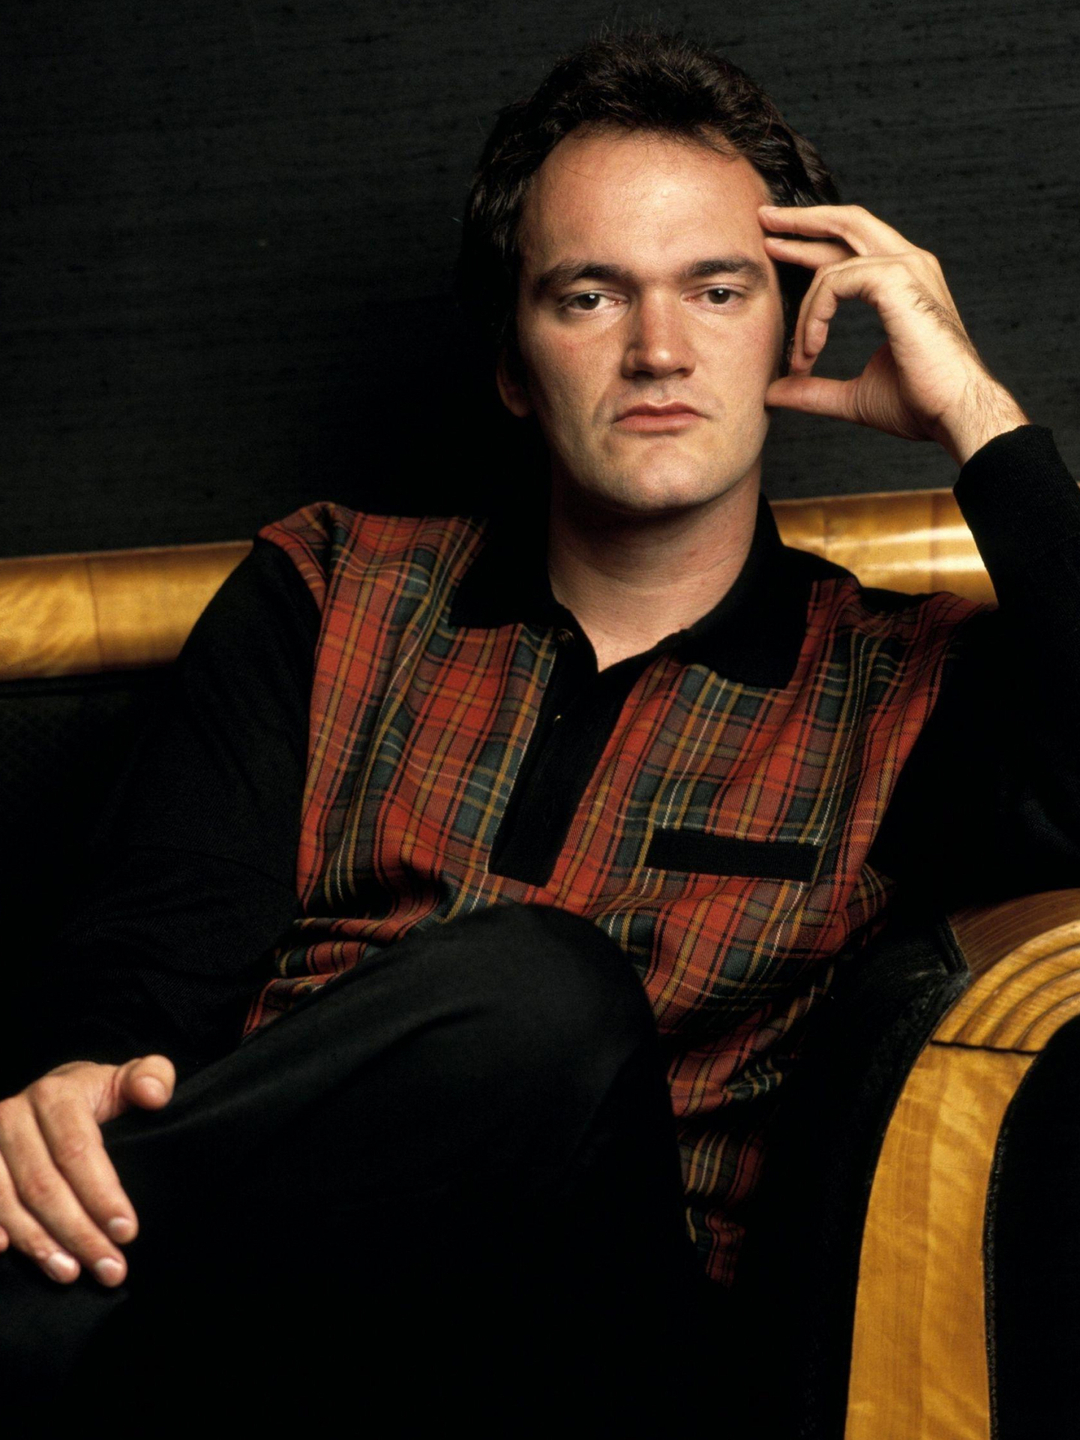 Quentin Tarantino life story